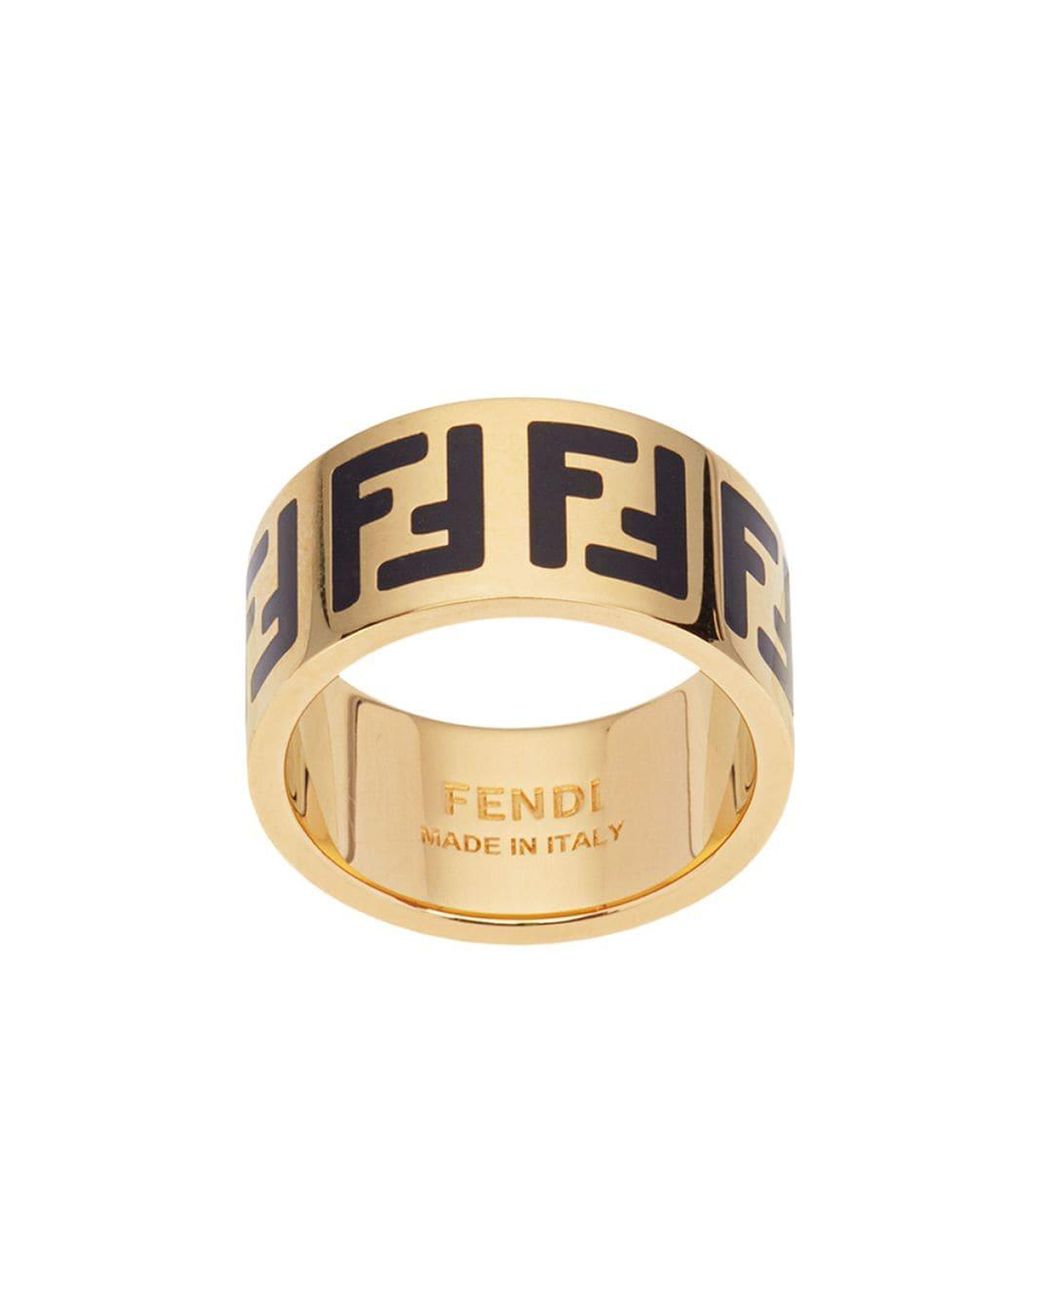 Fendi Mens Ring Hot Sale, SAVE 50%.